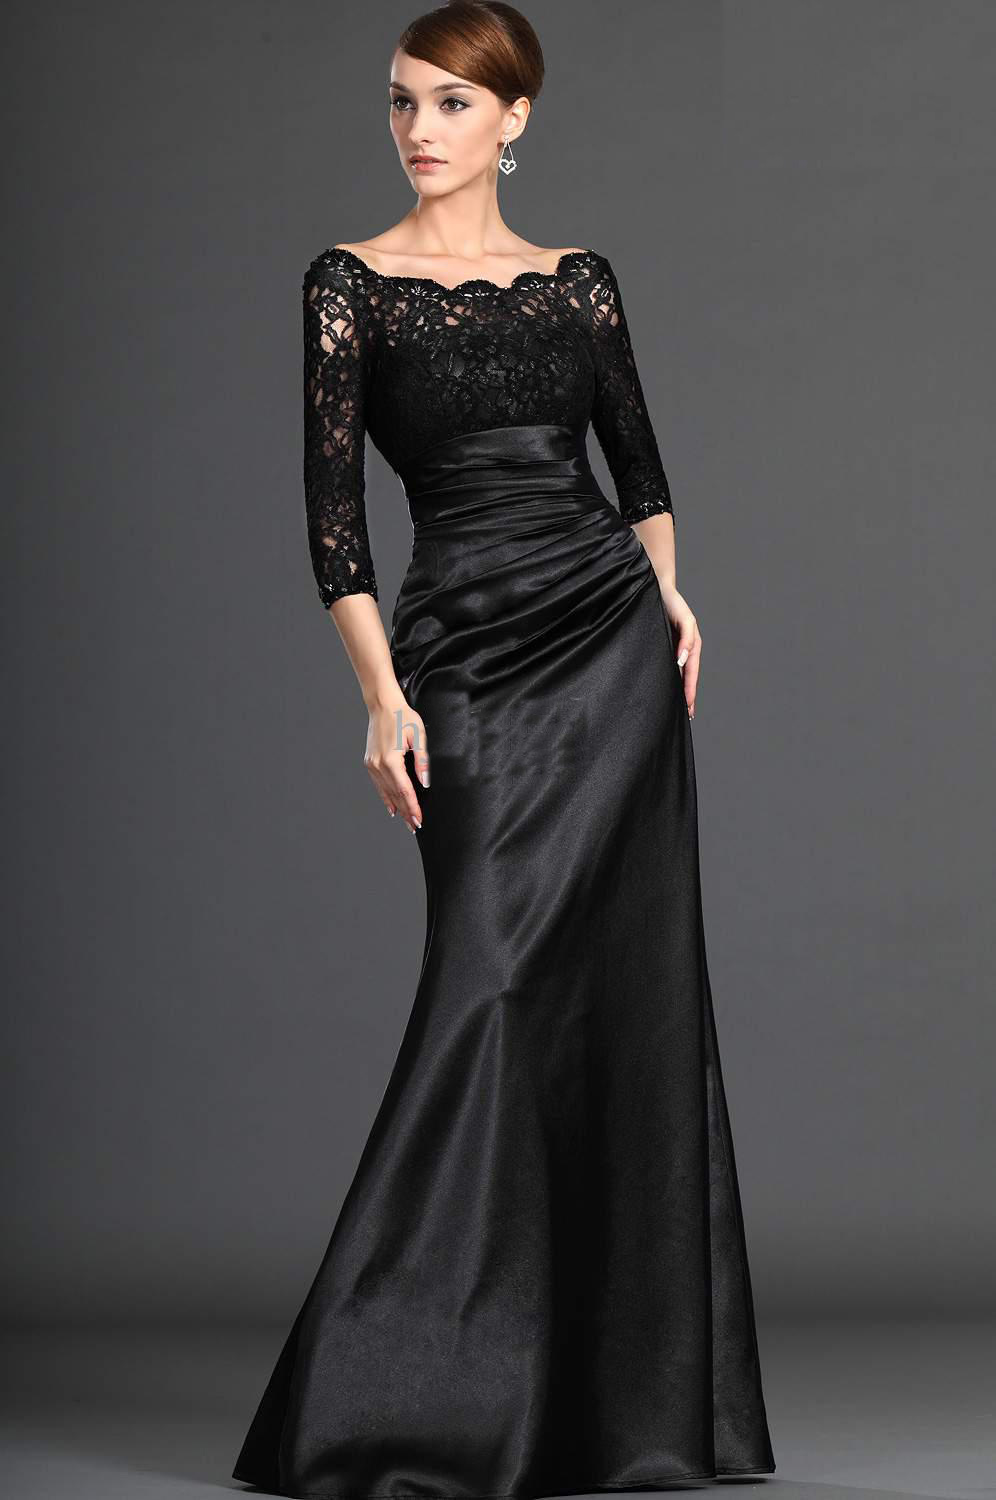 Black dress for wedding